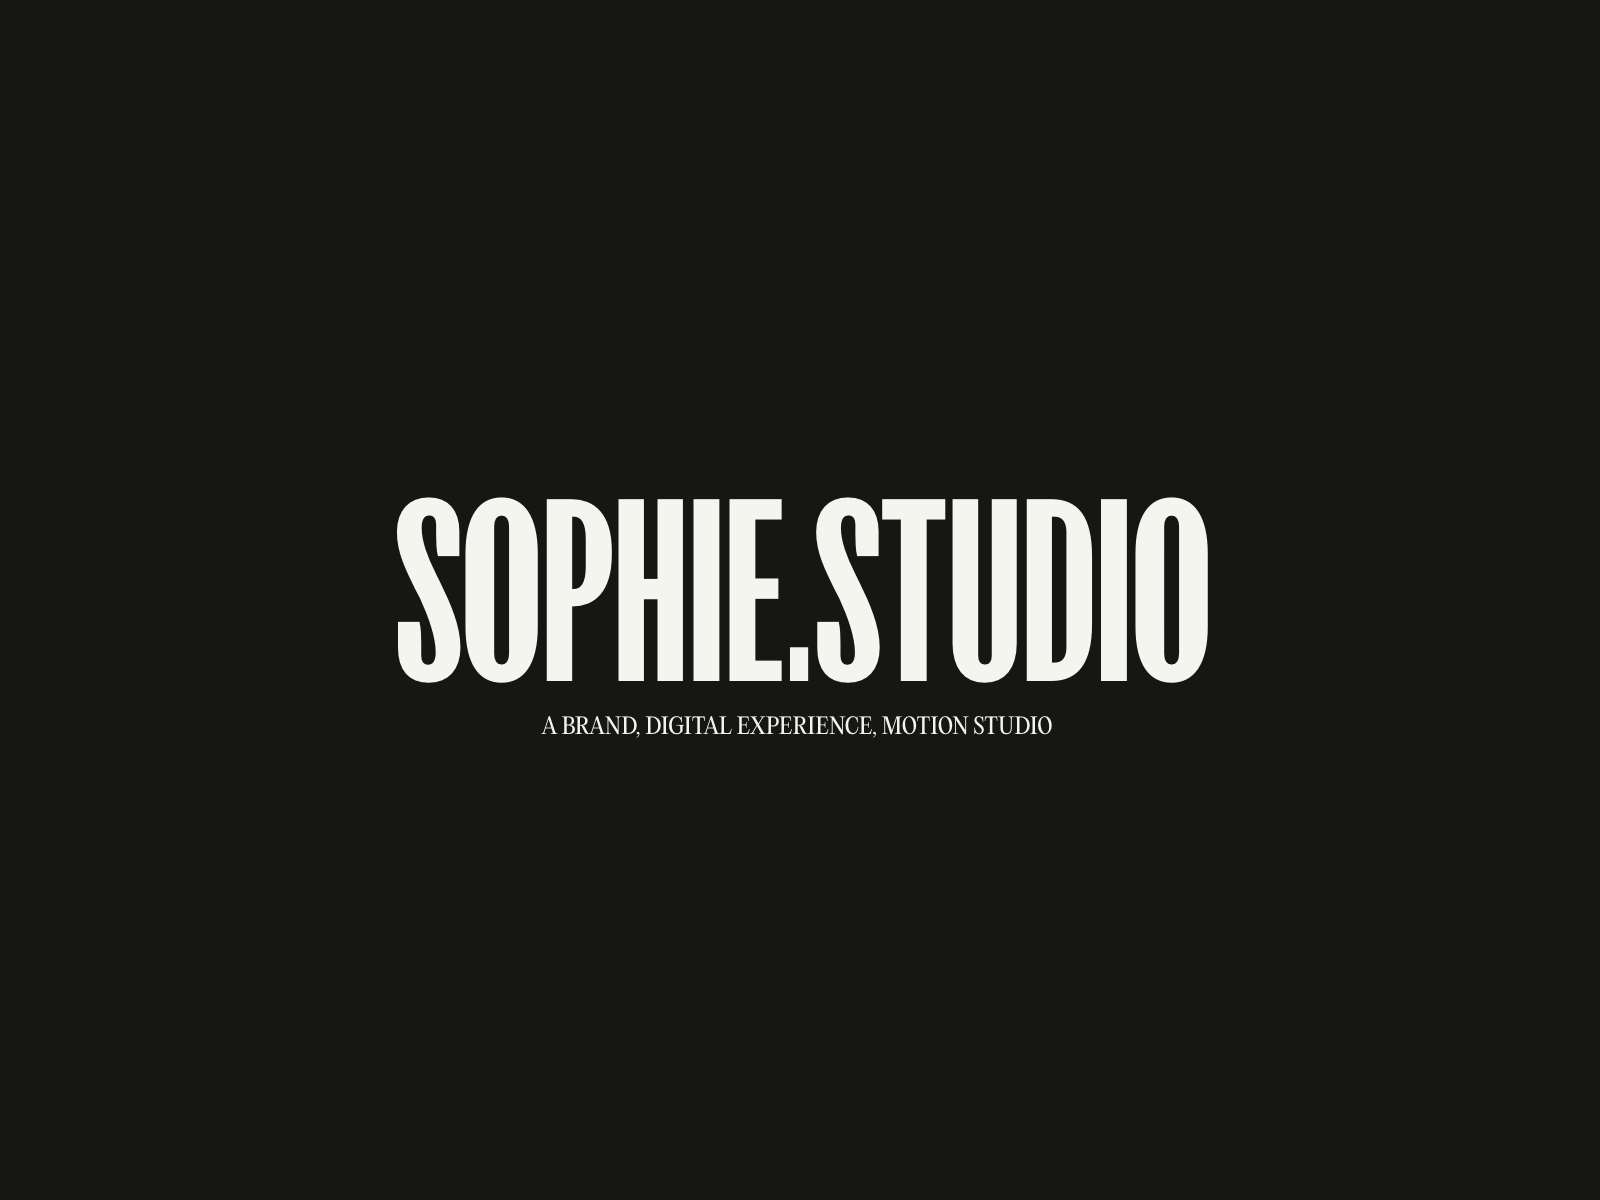 SOPHIE.STUDIO